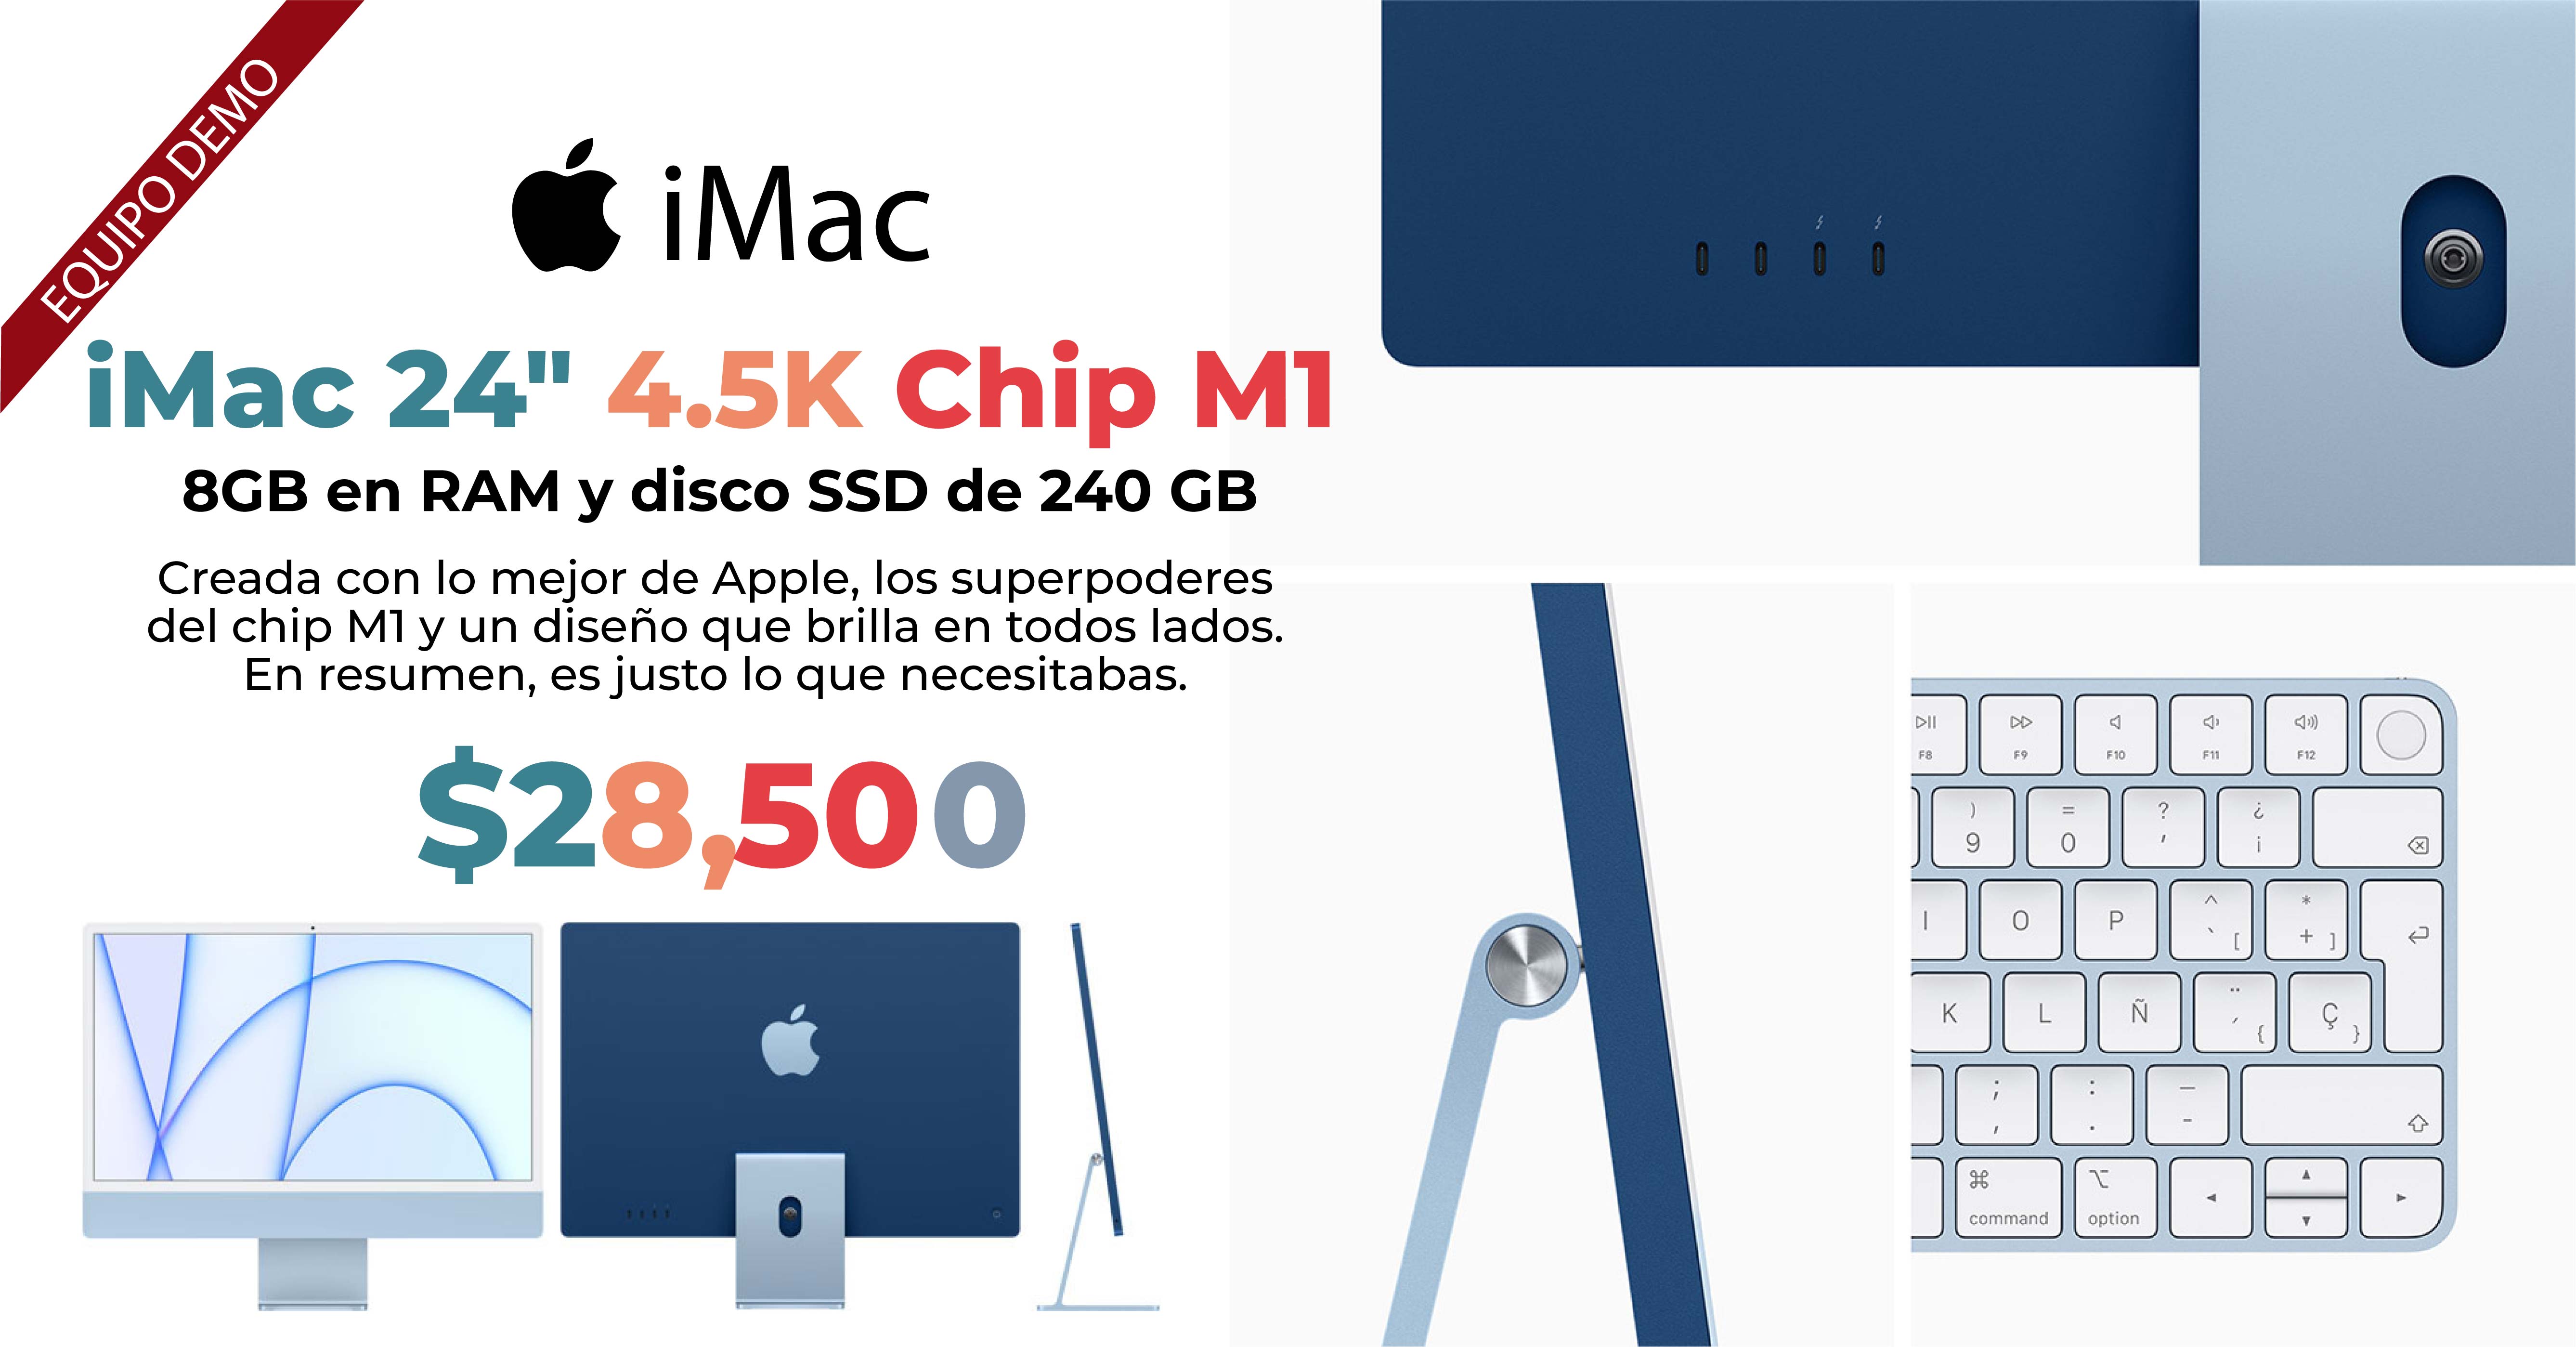 iMac 24" 4.5K Chip M1